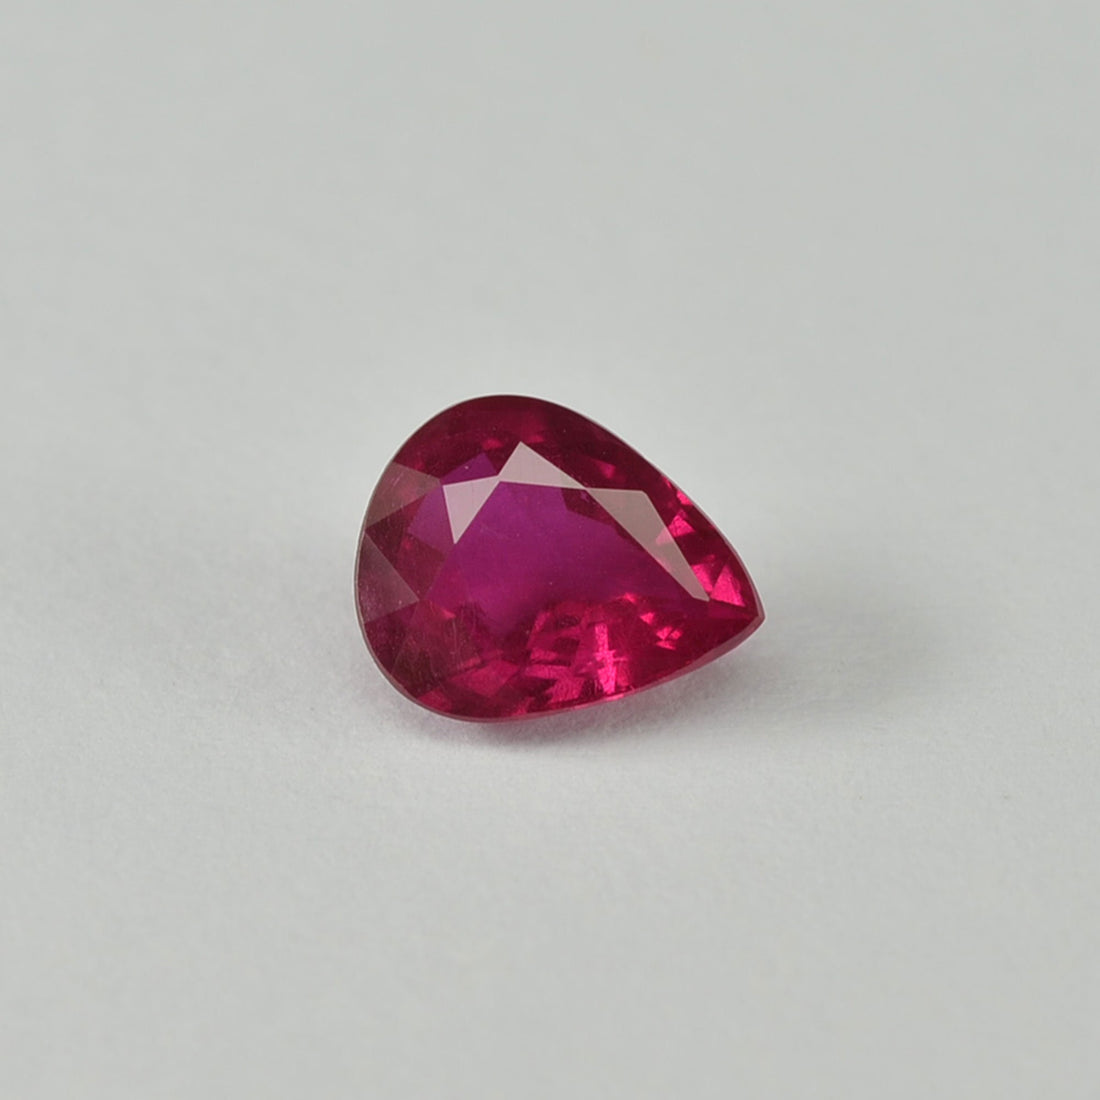 0.61 cts Natural Burma Ruby Loose Gemstone Pear Cut